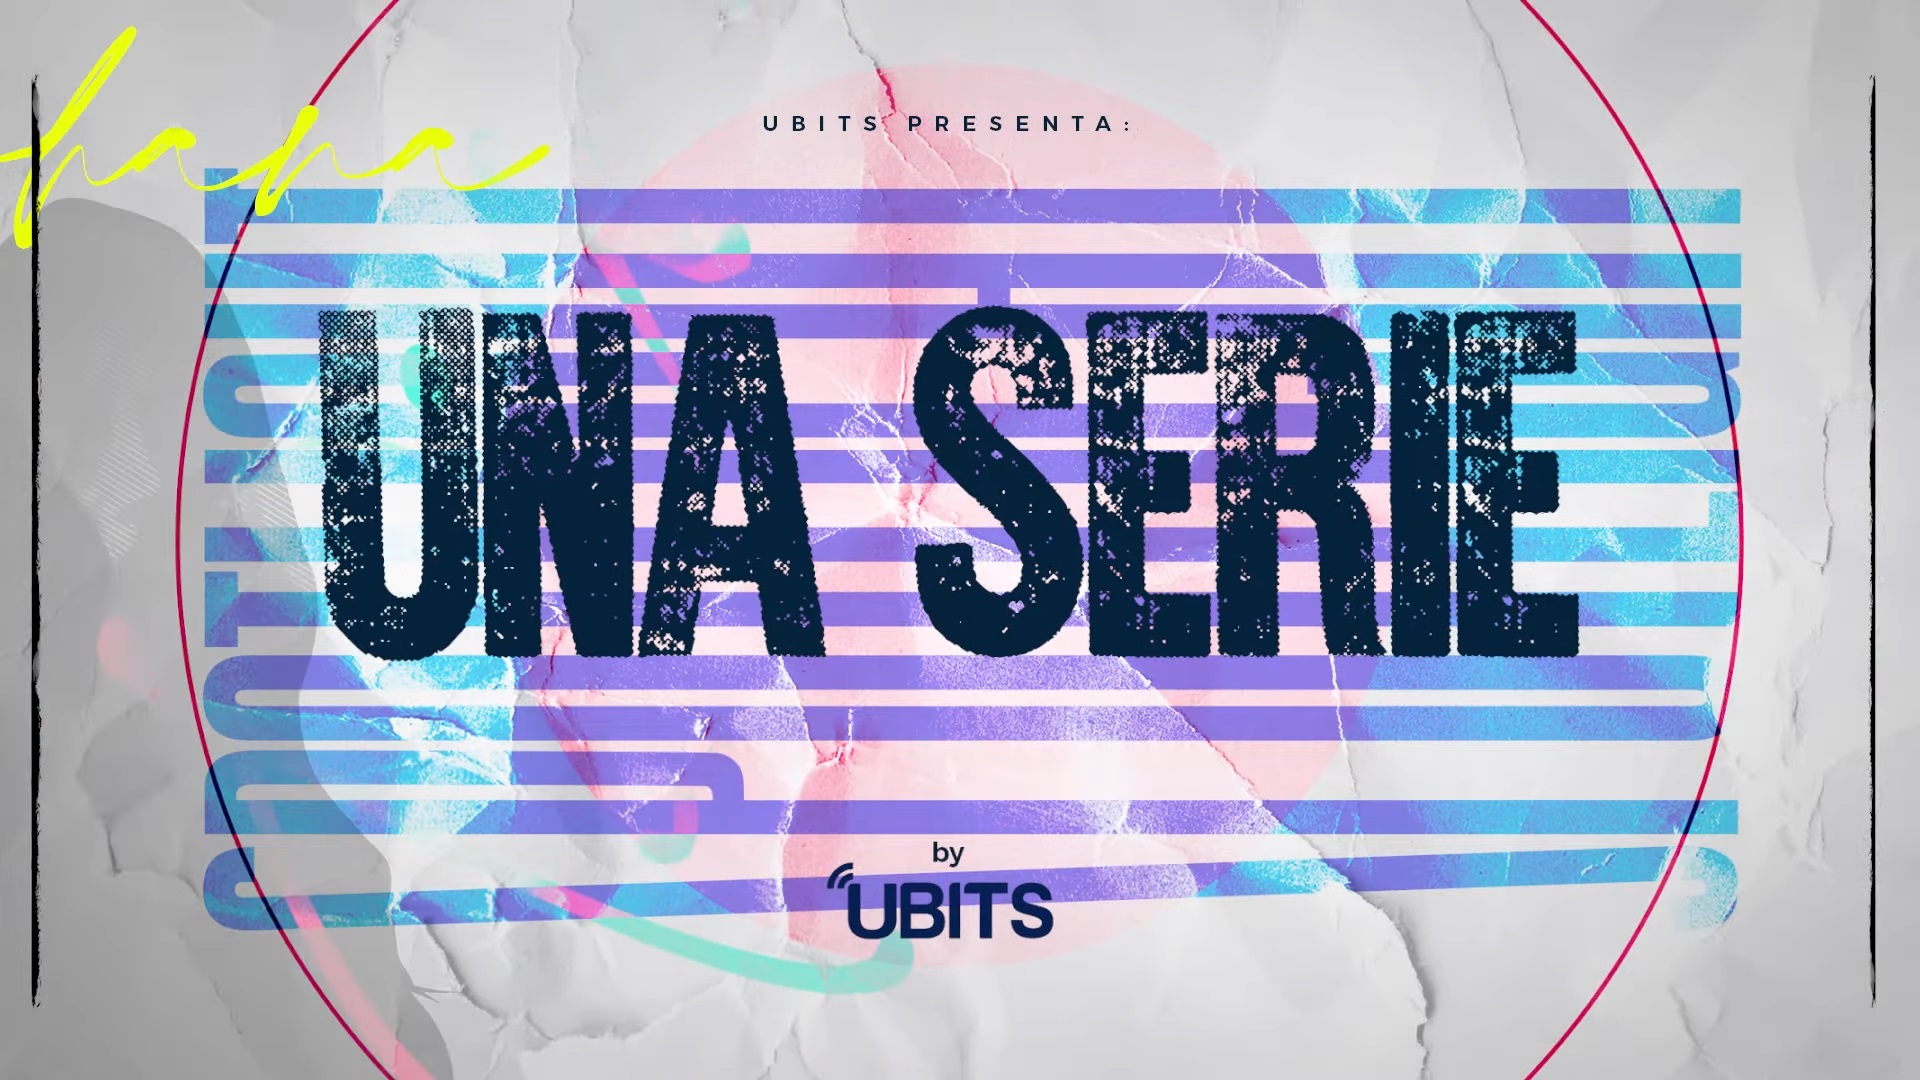 UBITS presenta “Spotlight”